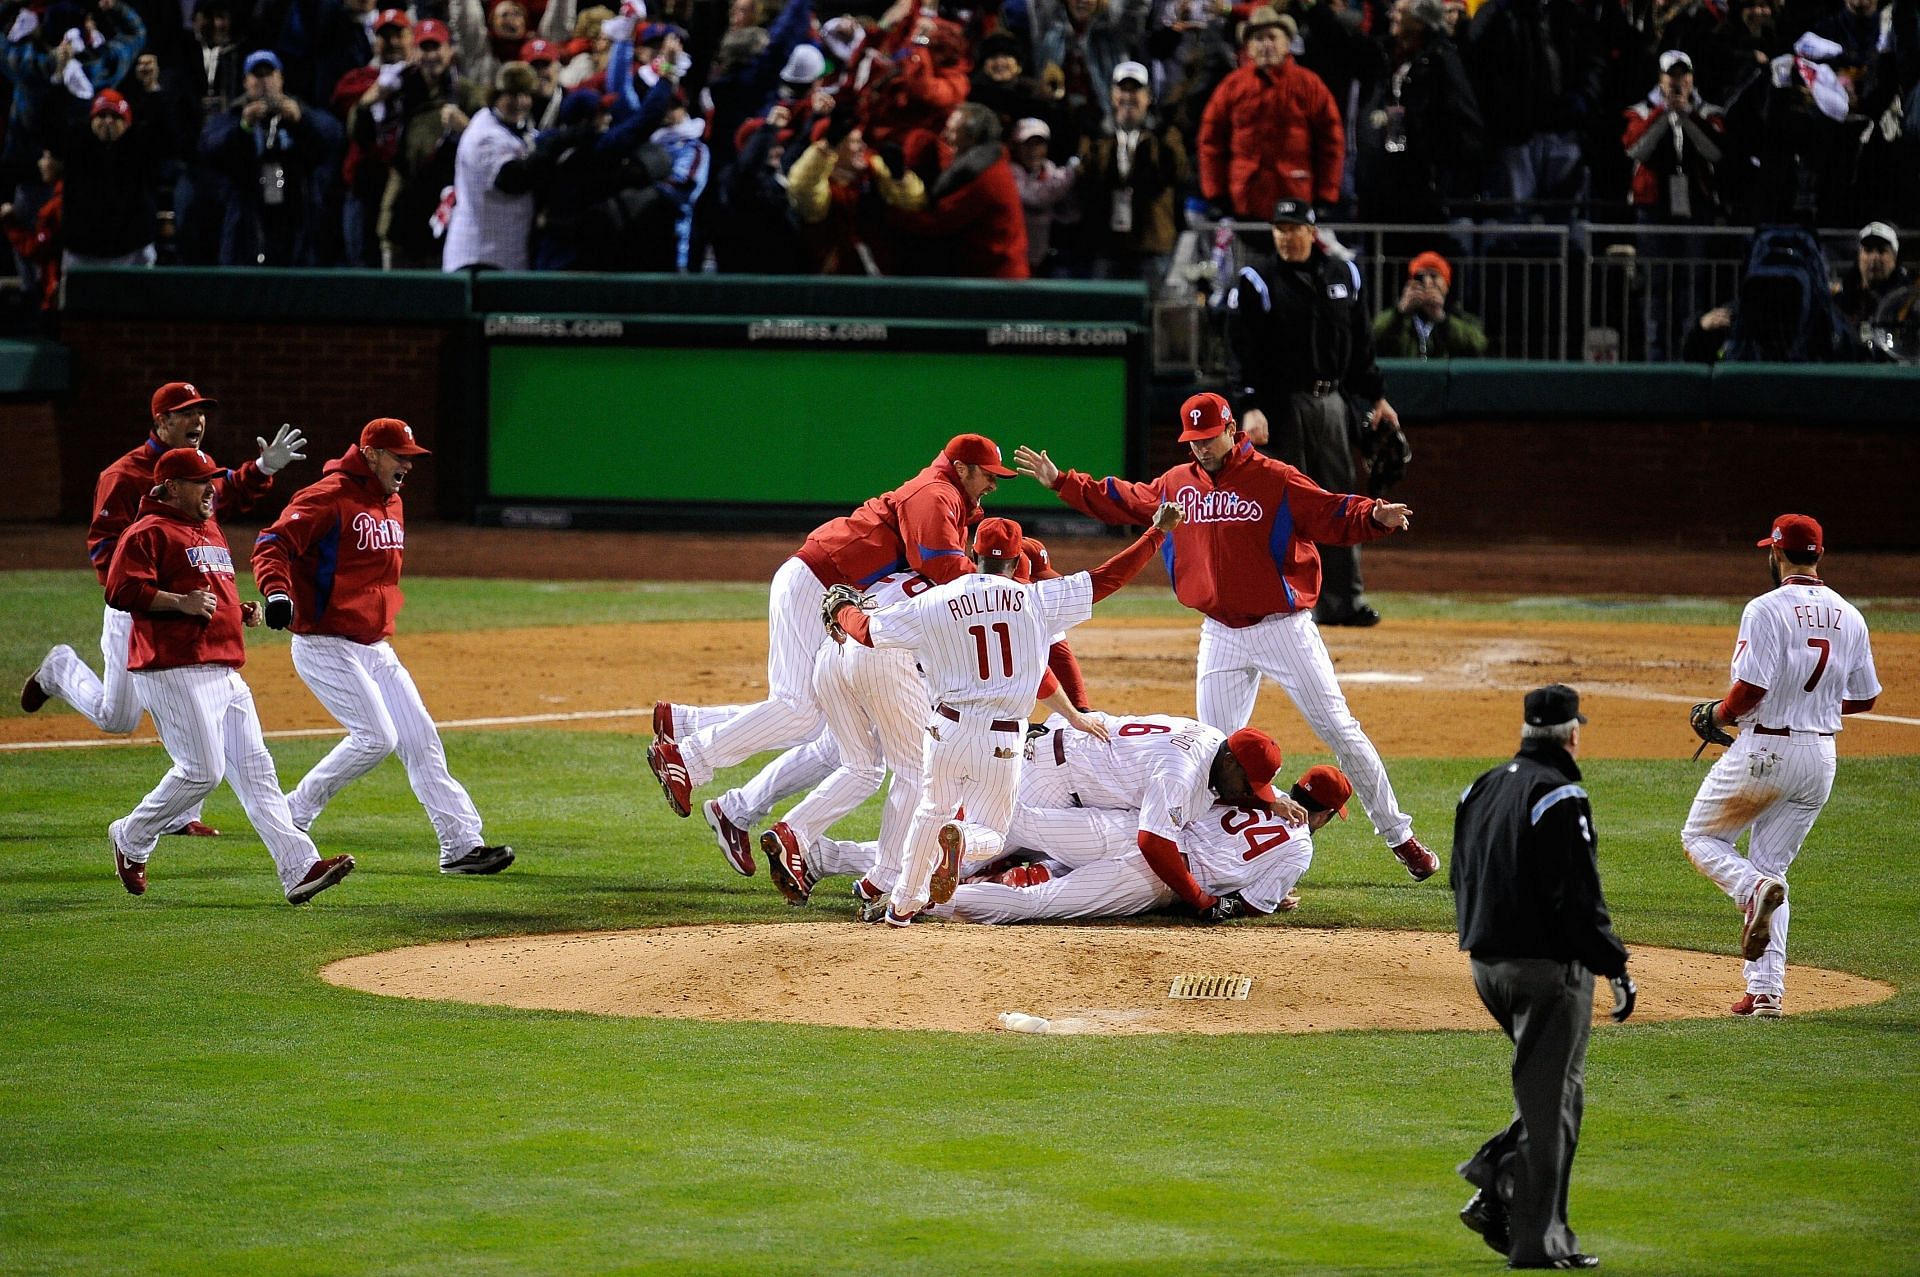 2008 World Series Game 5: Phillies win the World Series 